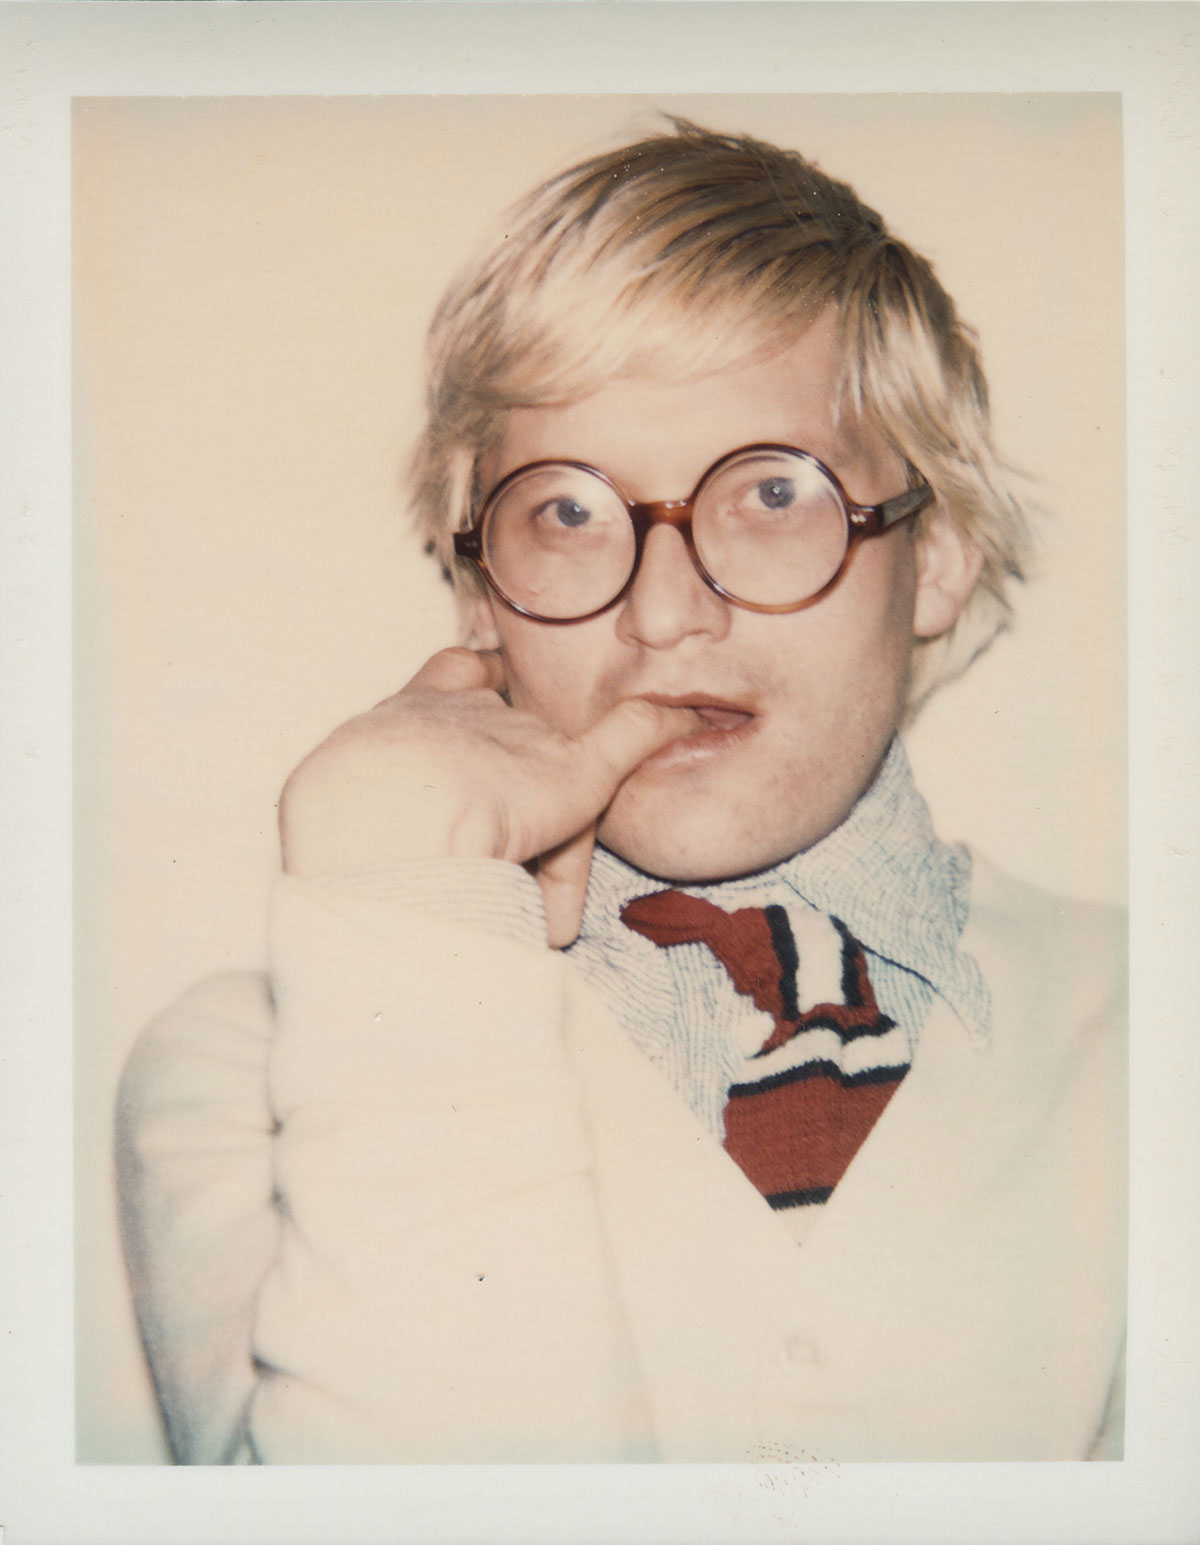 David Hockney, 1974 by Andy Warhol. From Andy Warhol Portraits